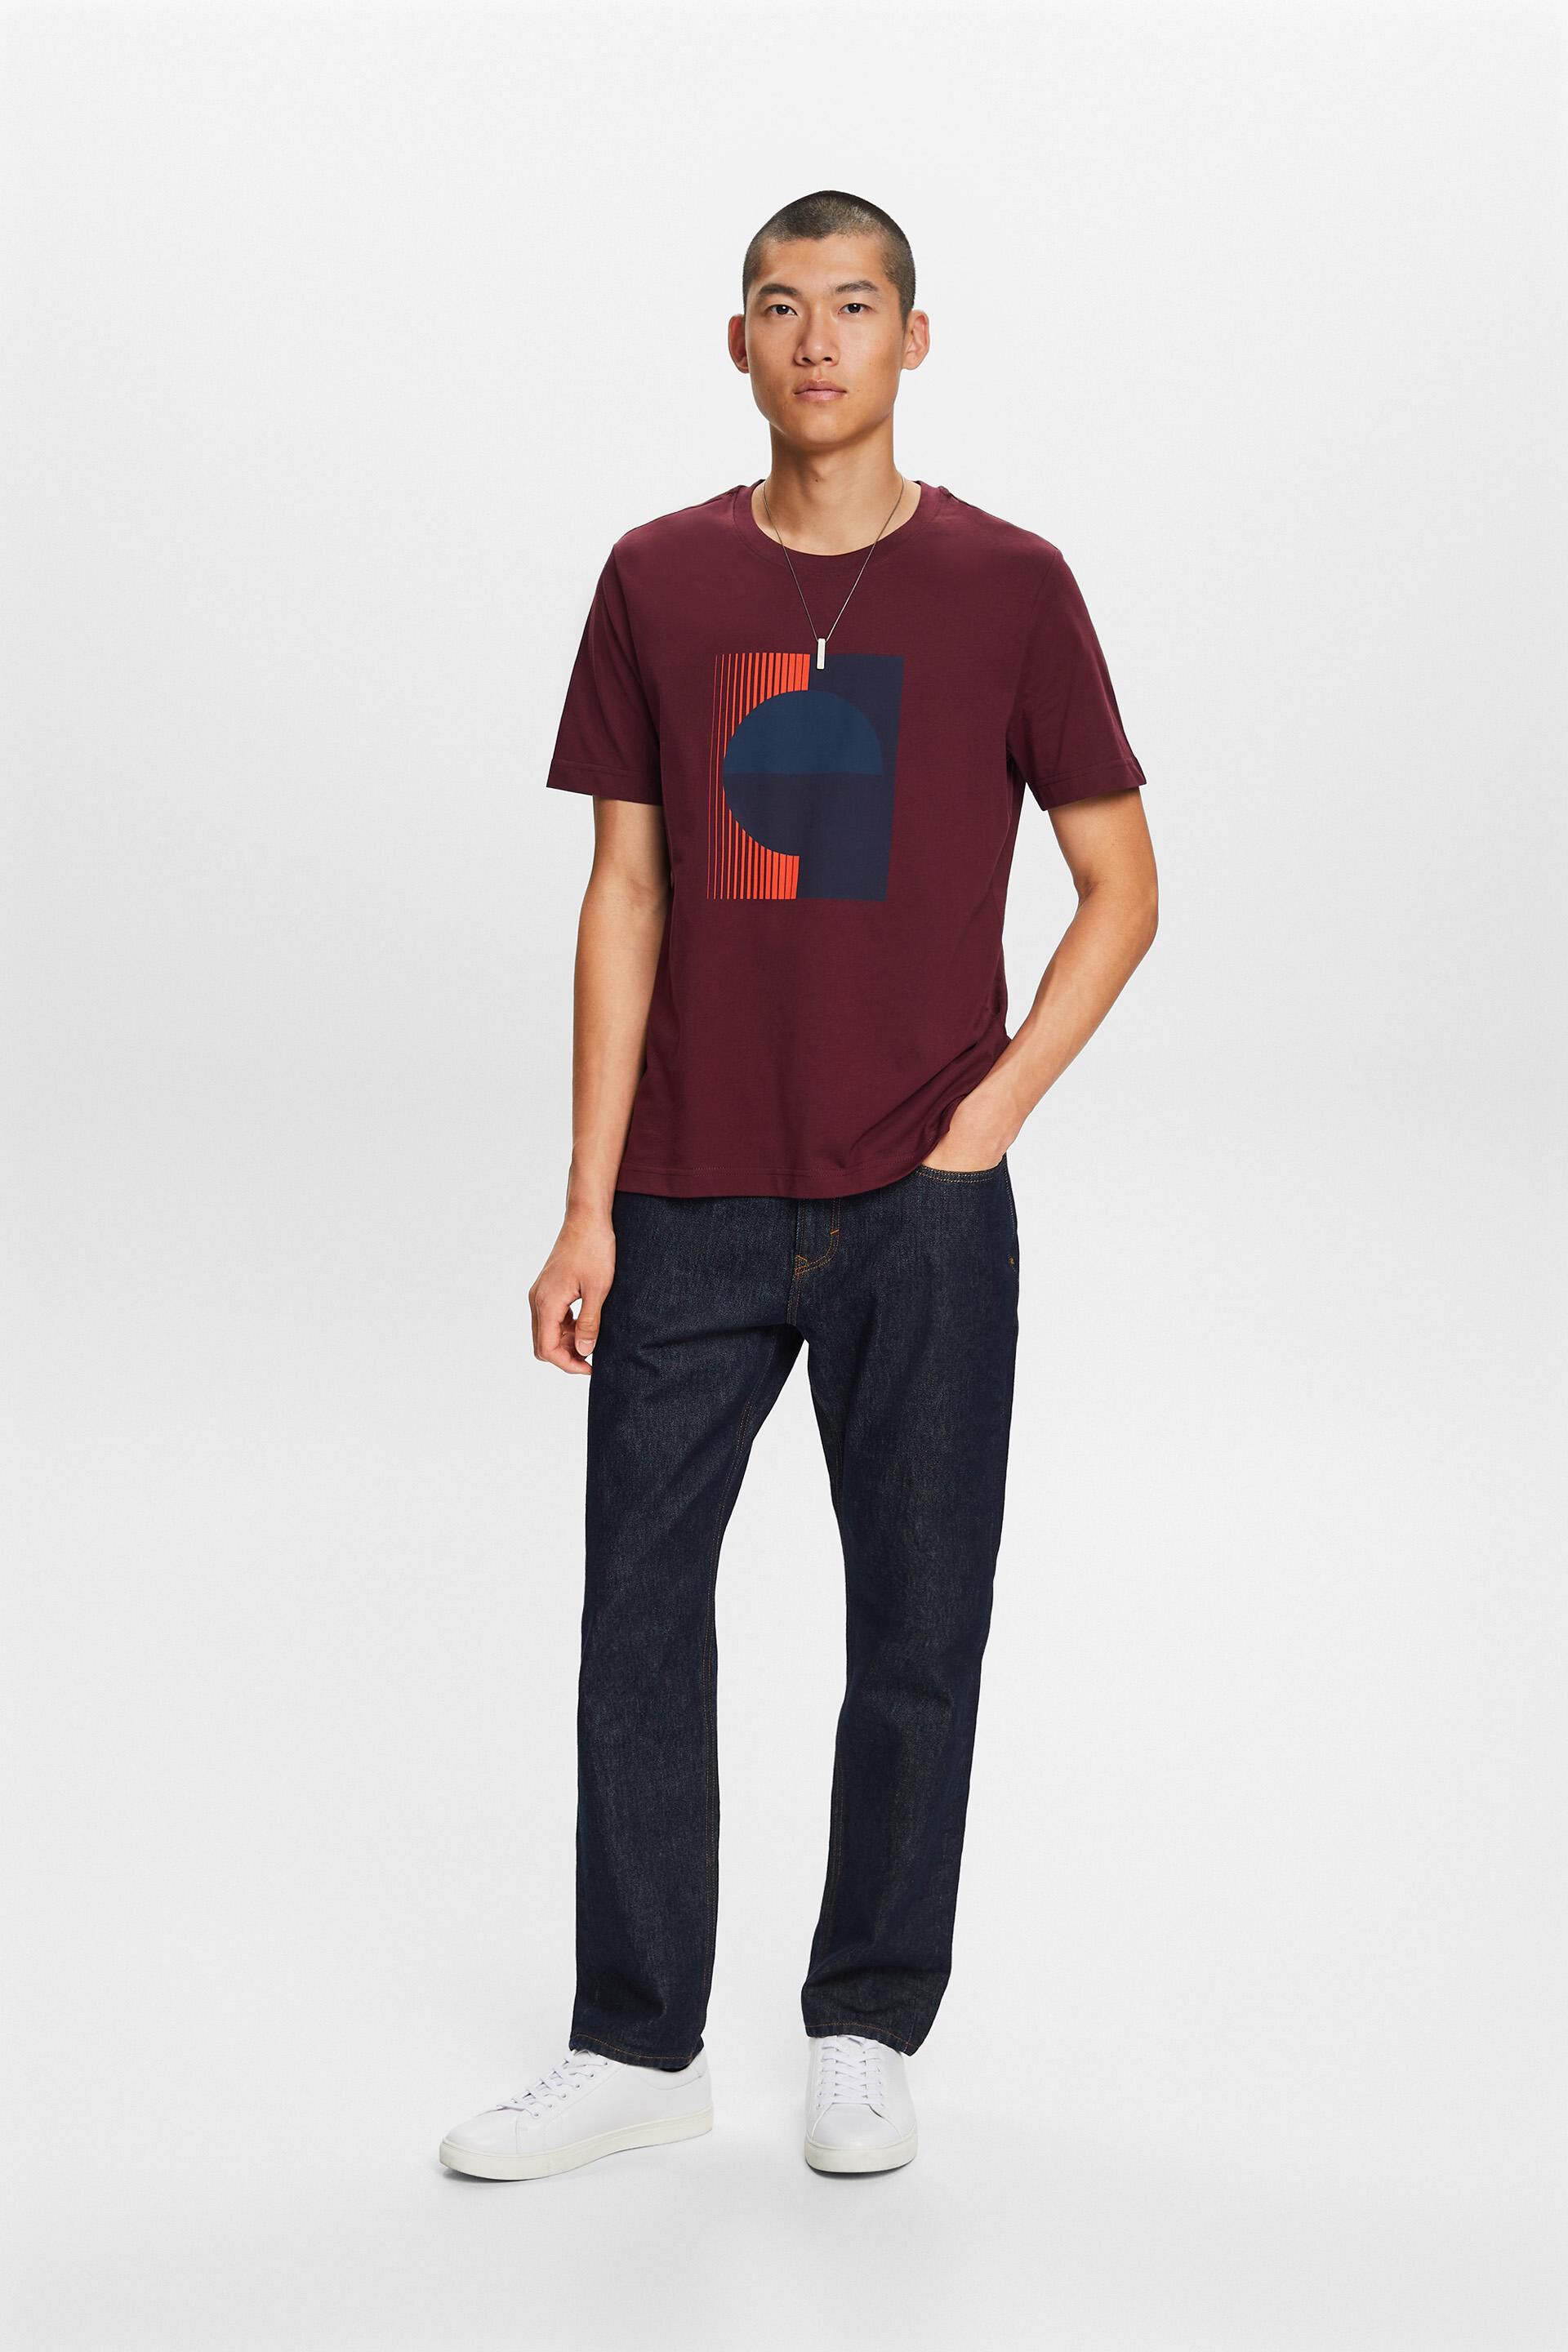 Esprit T-shirt print, cotton with Jersey 100%